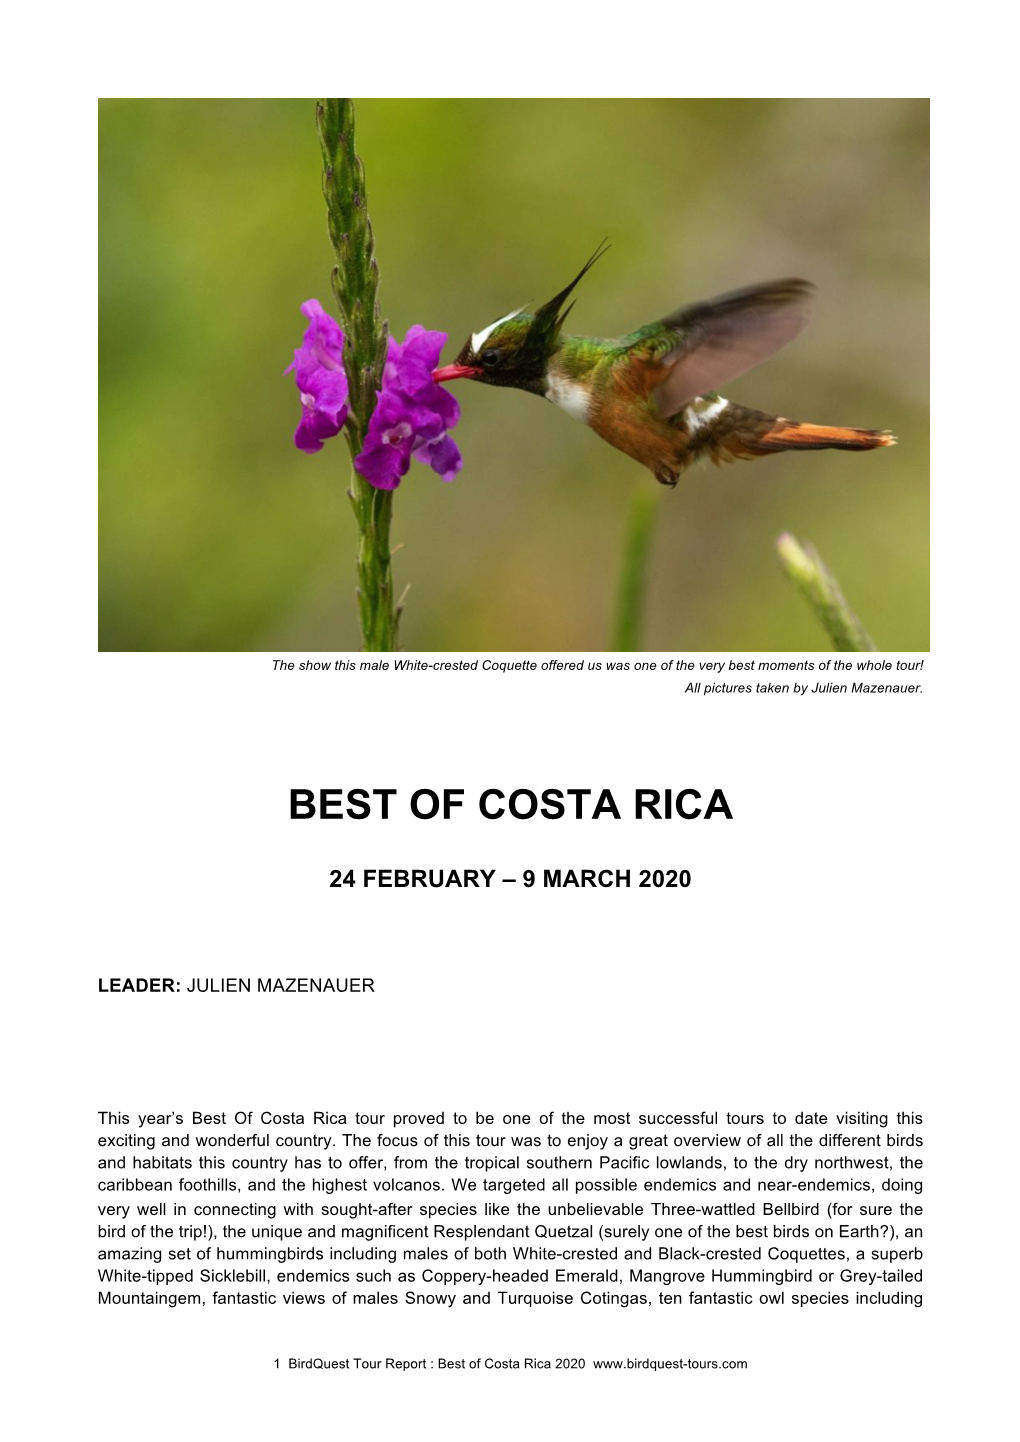 Best of Costa Rica Tour Report 2020